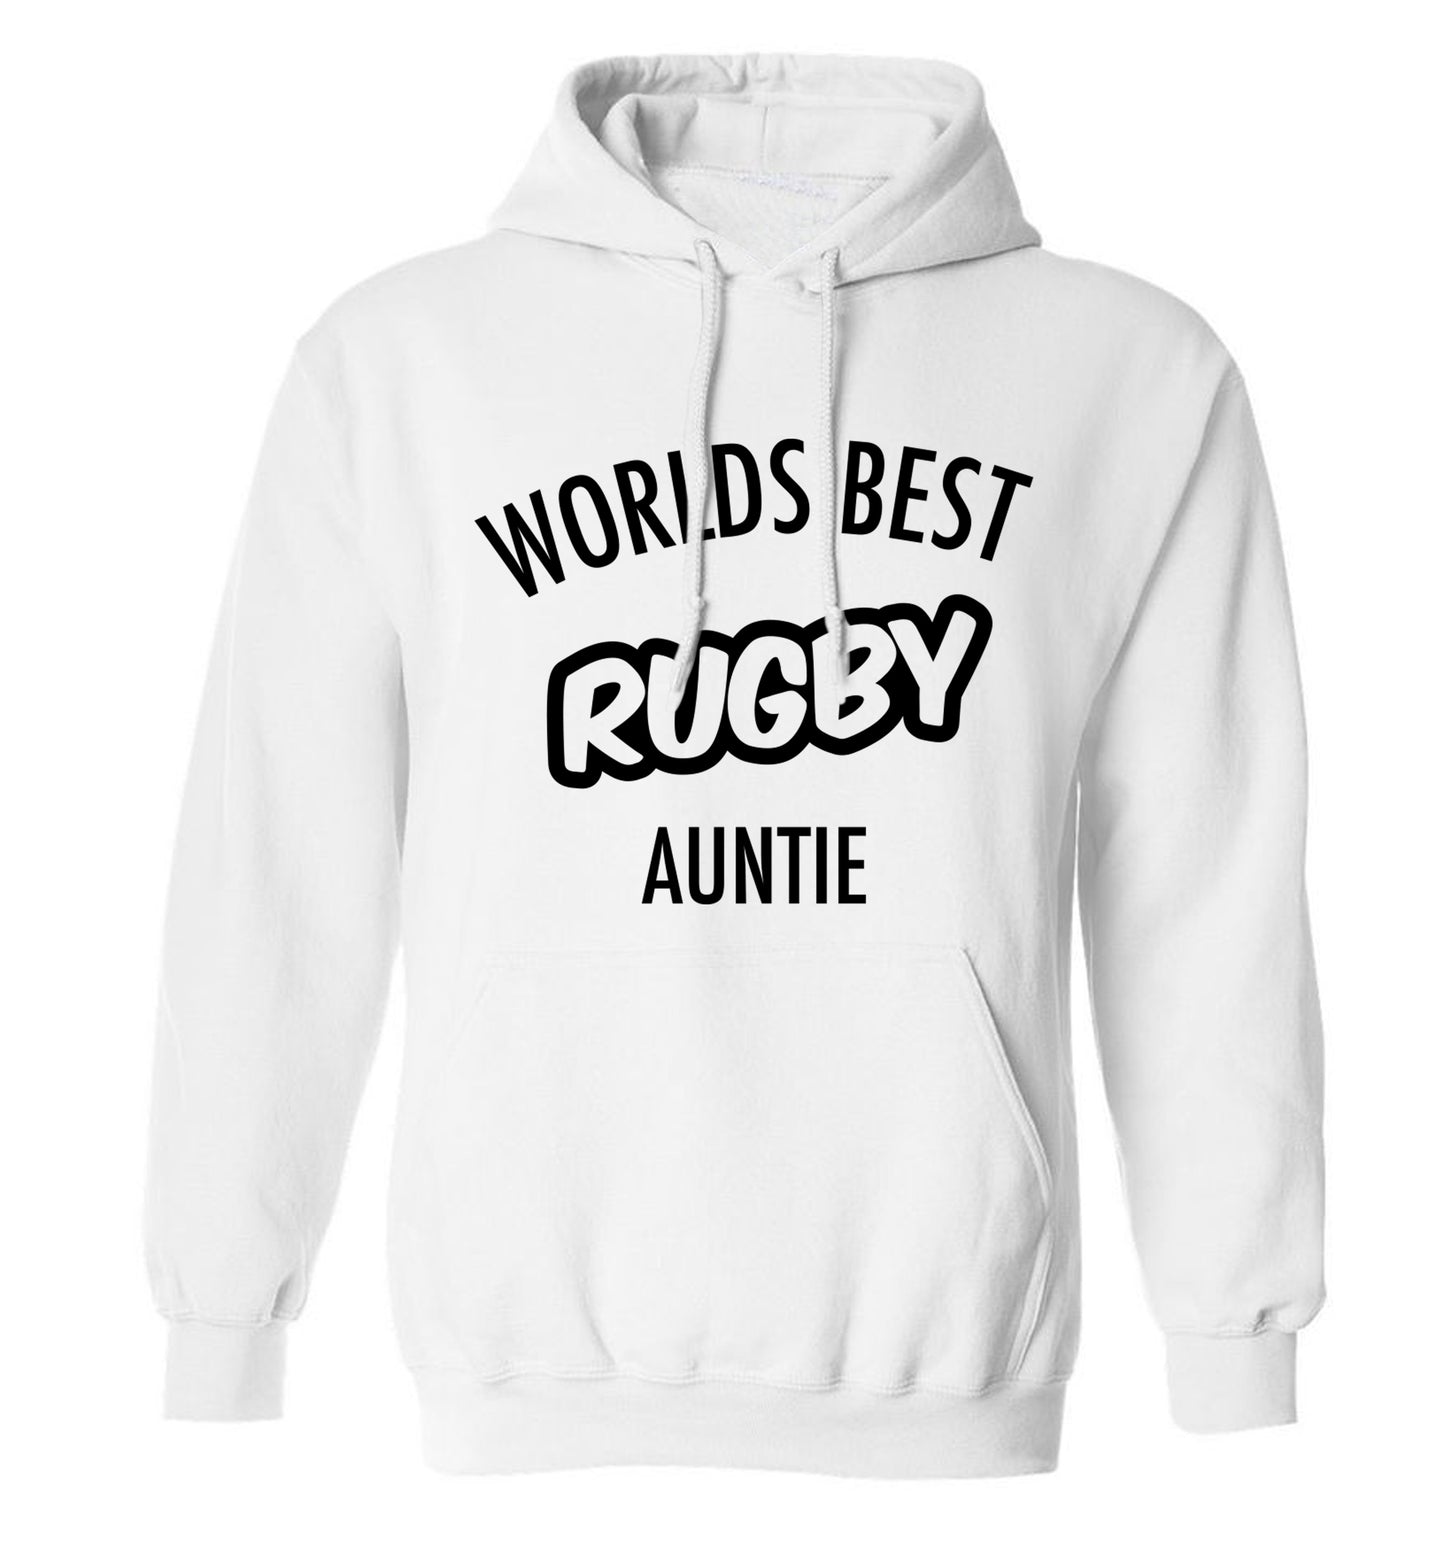 Worlds best rugby auntie adults unisex white hoodie 2XL